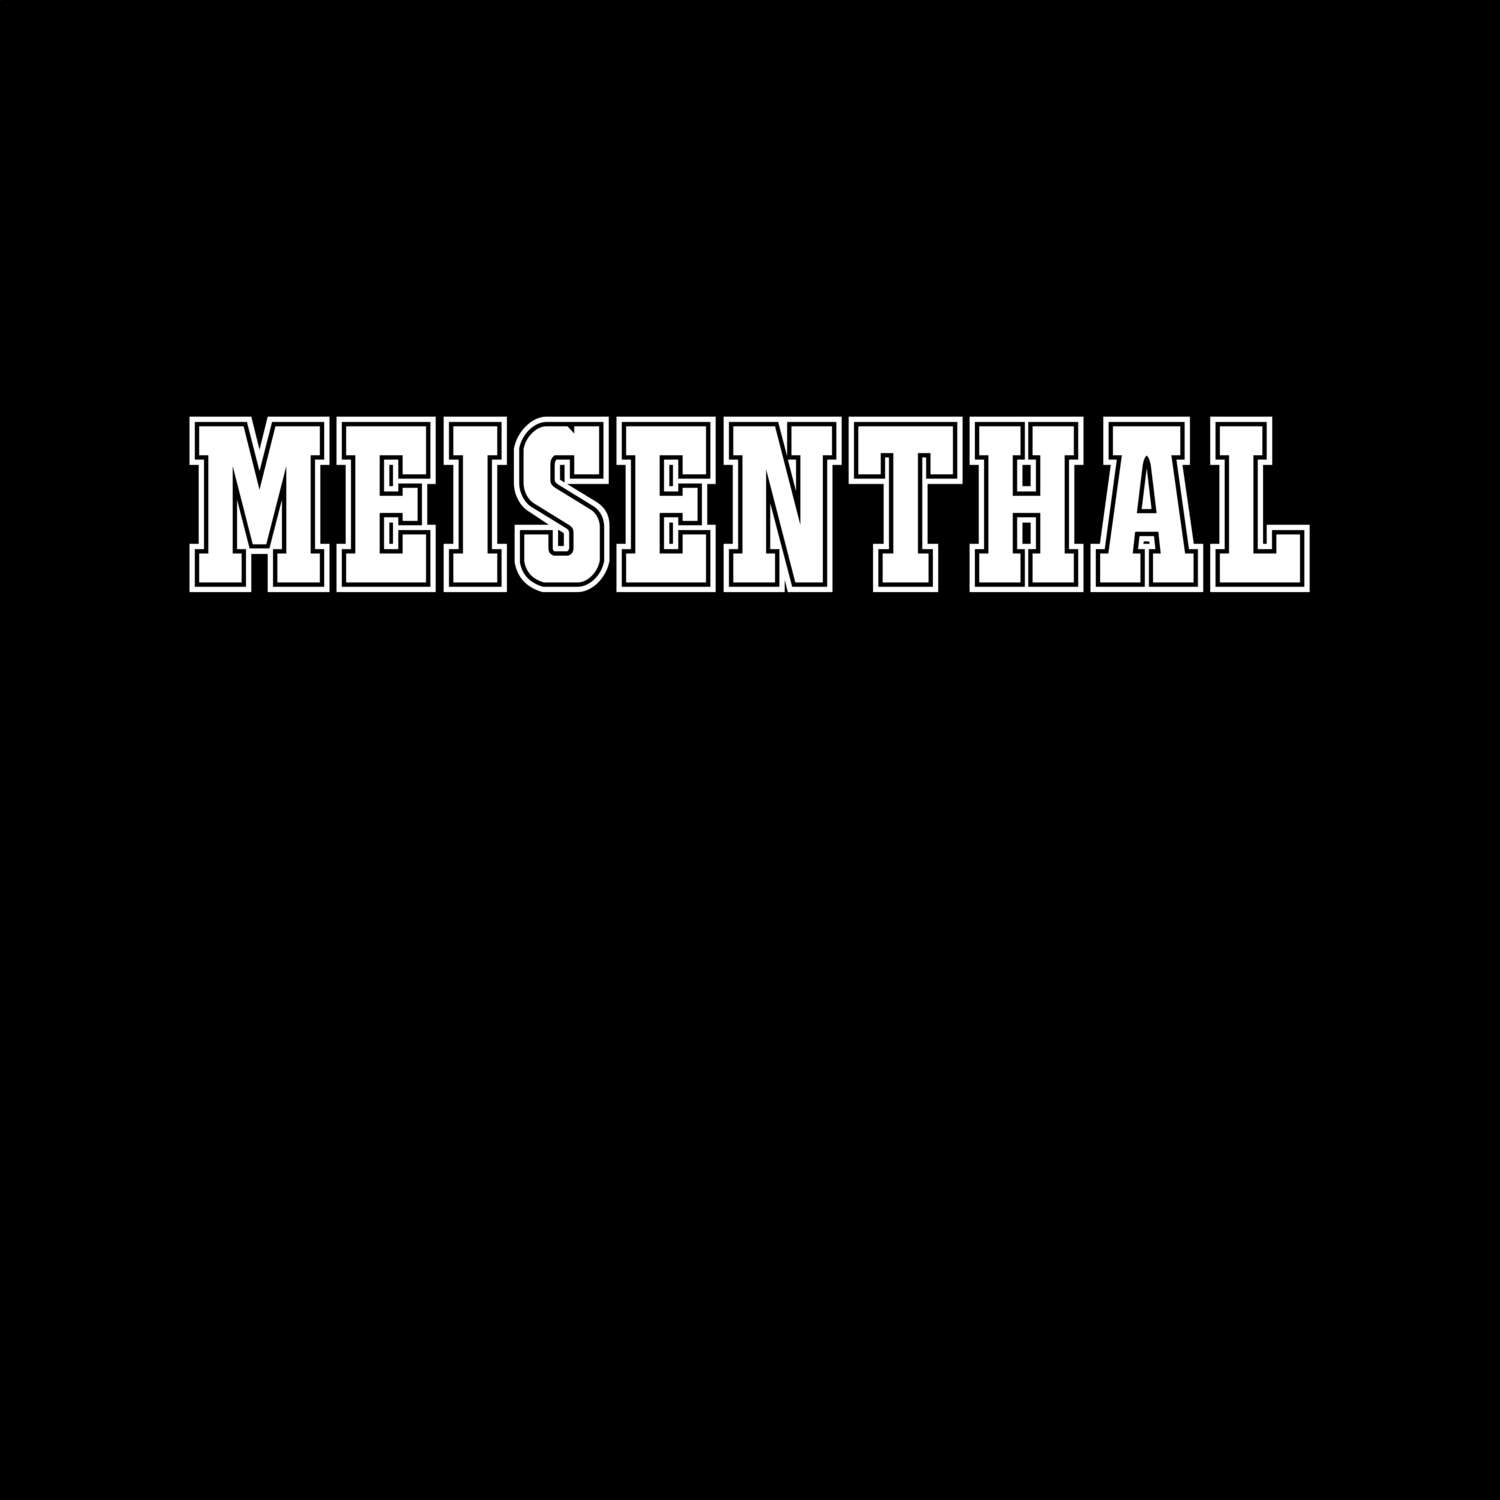 Meisenthal T-Shirt »Classic«